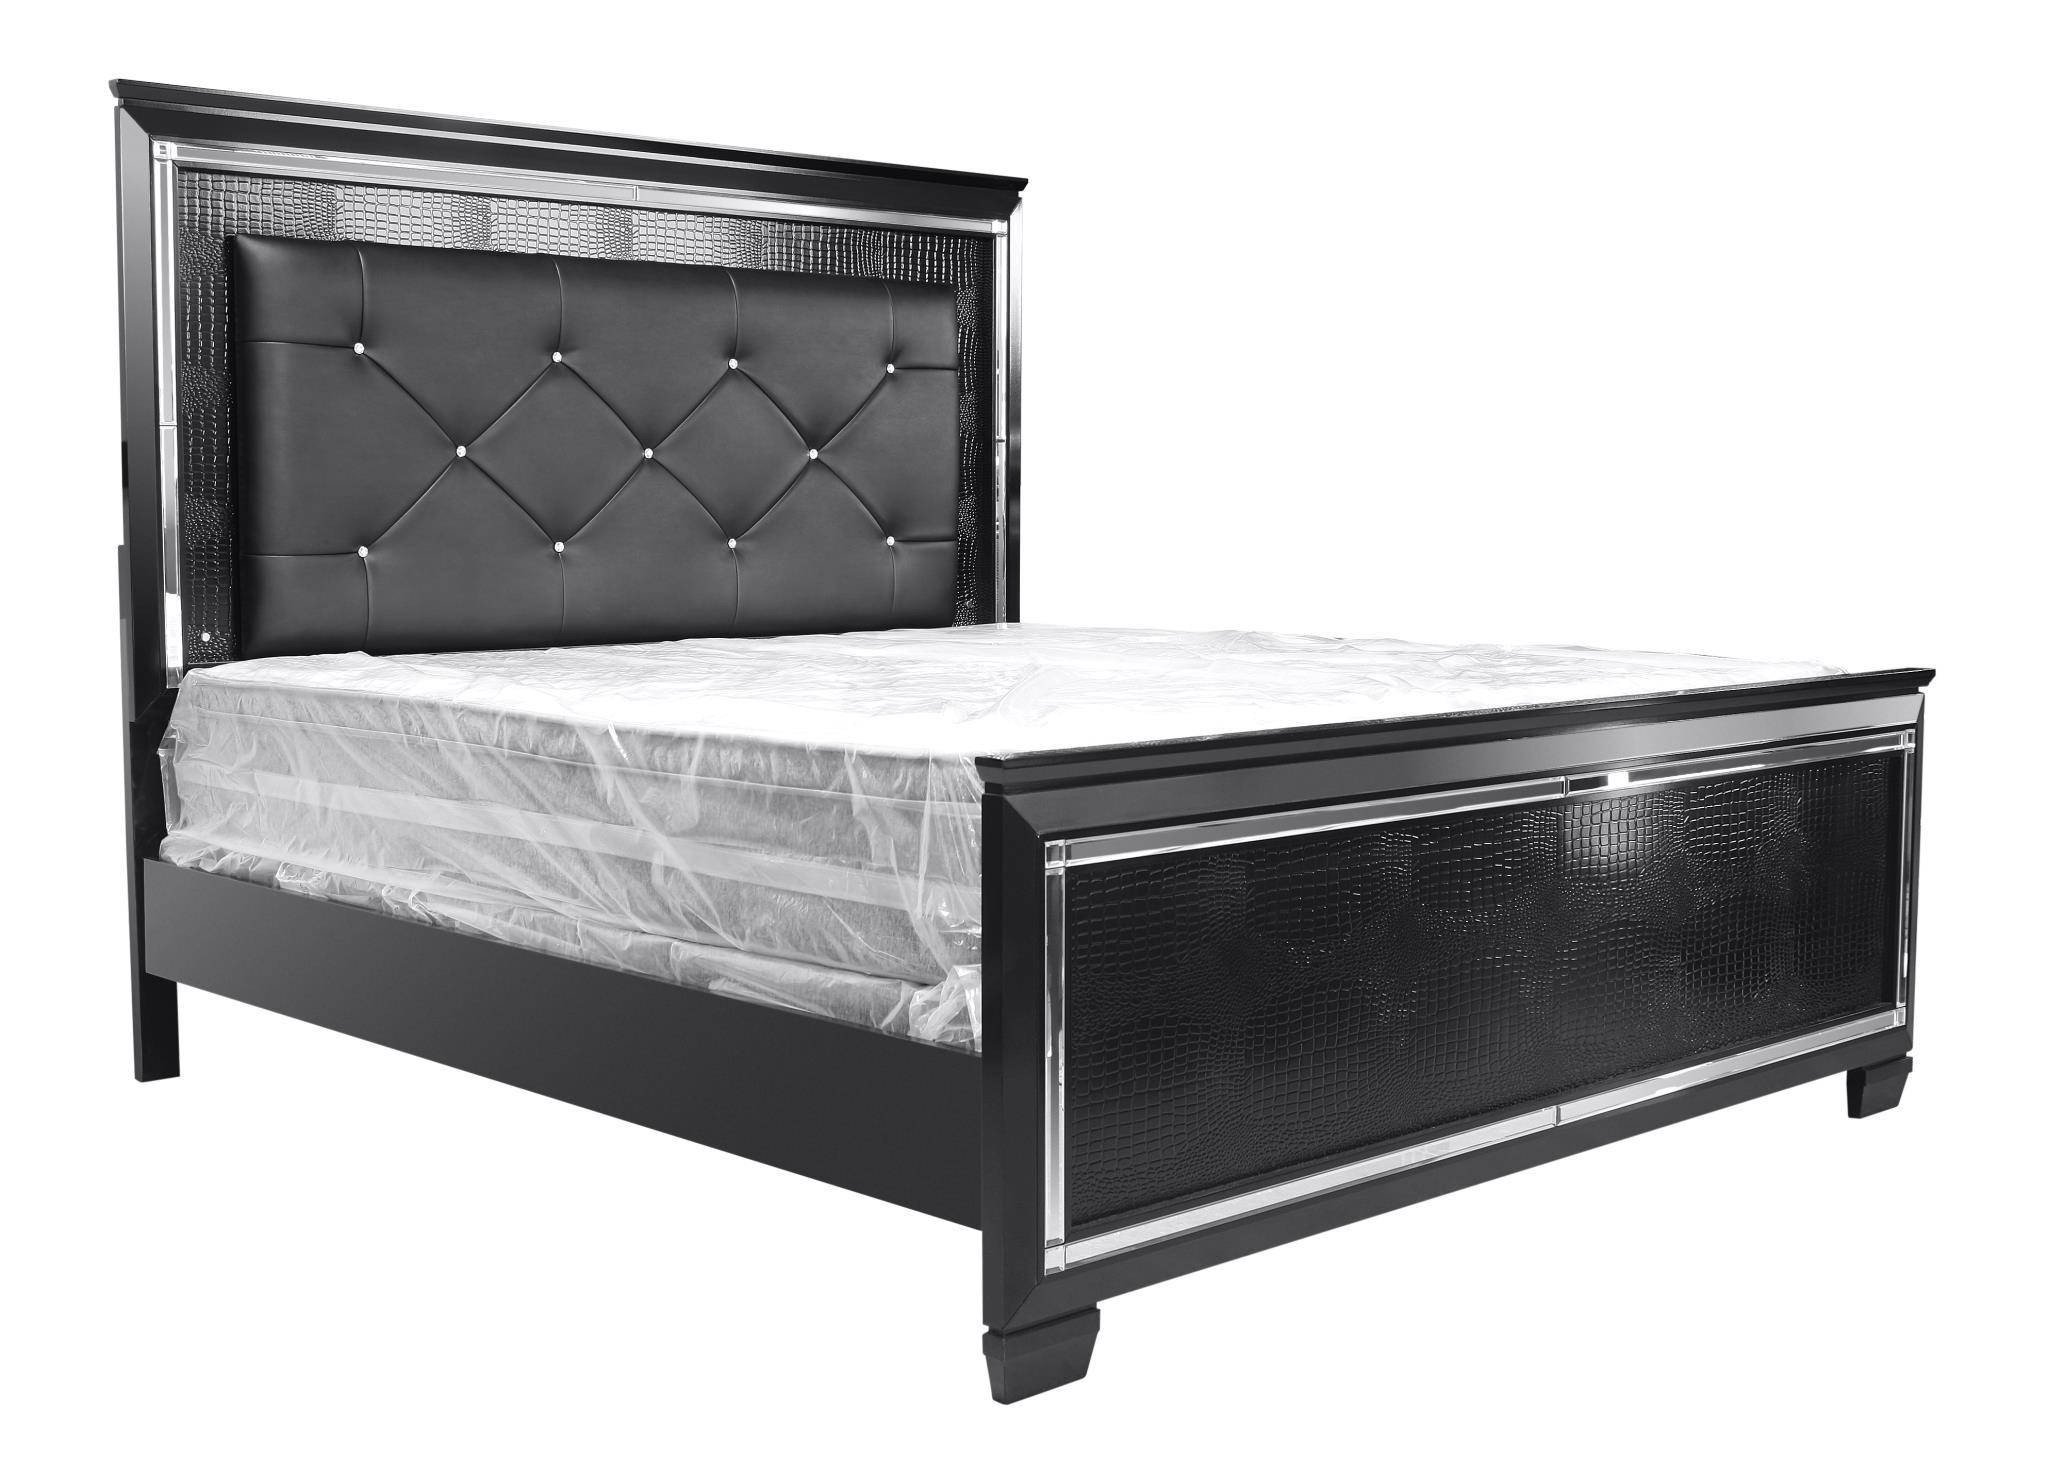 Light Wood Bedroom Furniture Beautiful soflex Tinley Black Diamond Tufted King Bedroom Set 5psc W